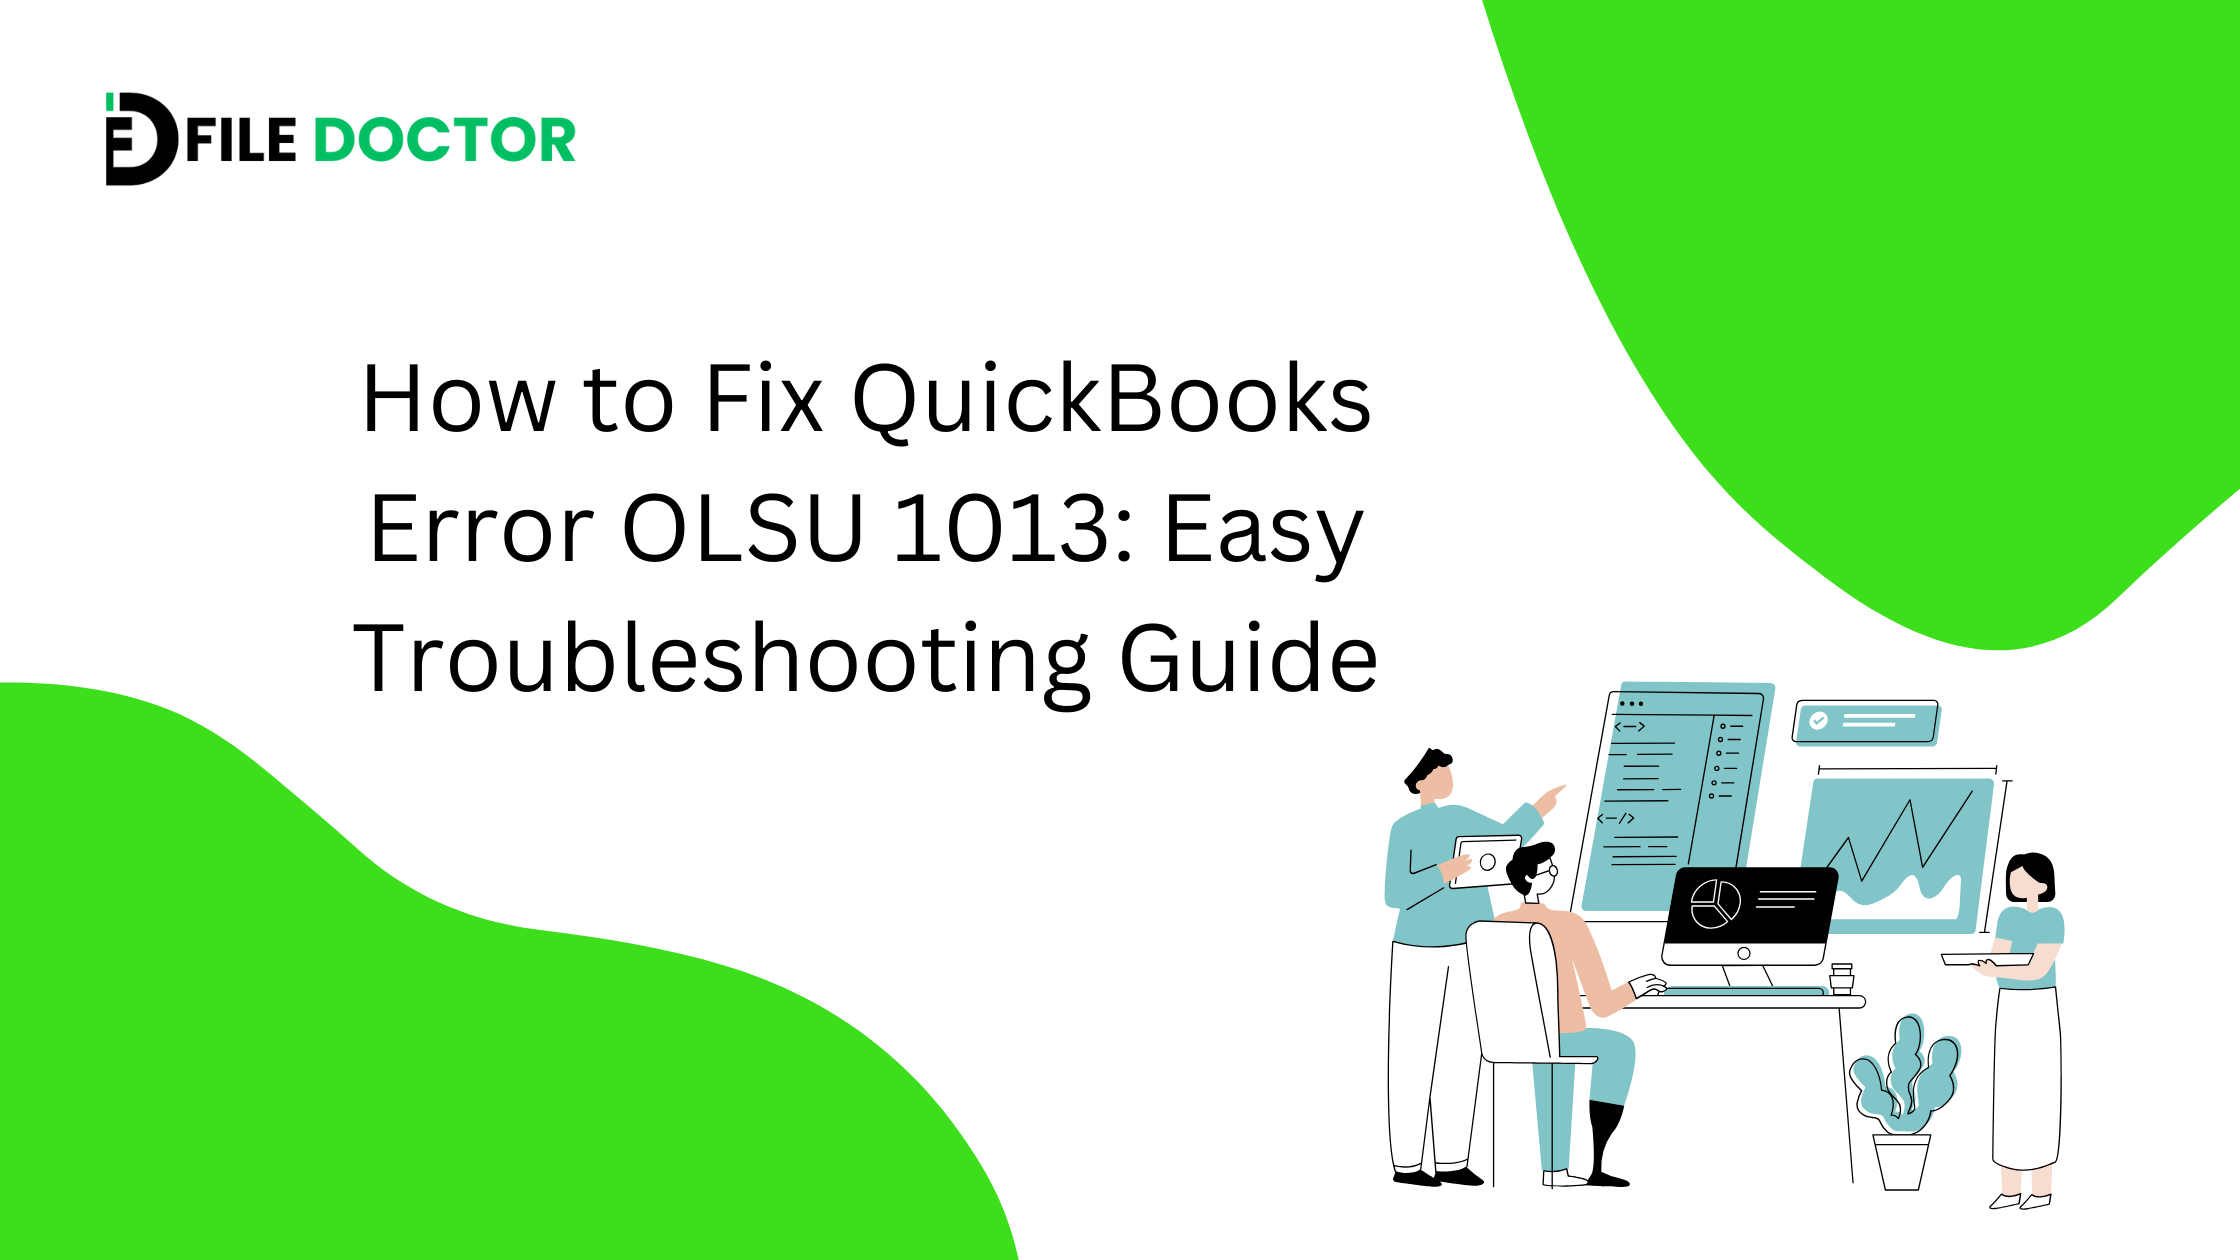 How to Fix QuickBooks Error OLSU 1013: Easy Troubleshooting Guide